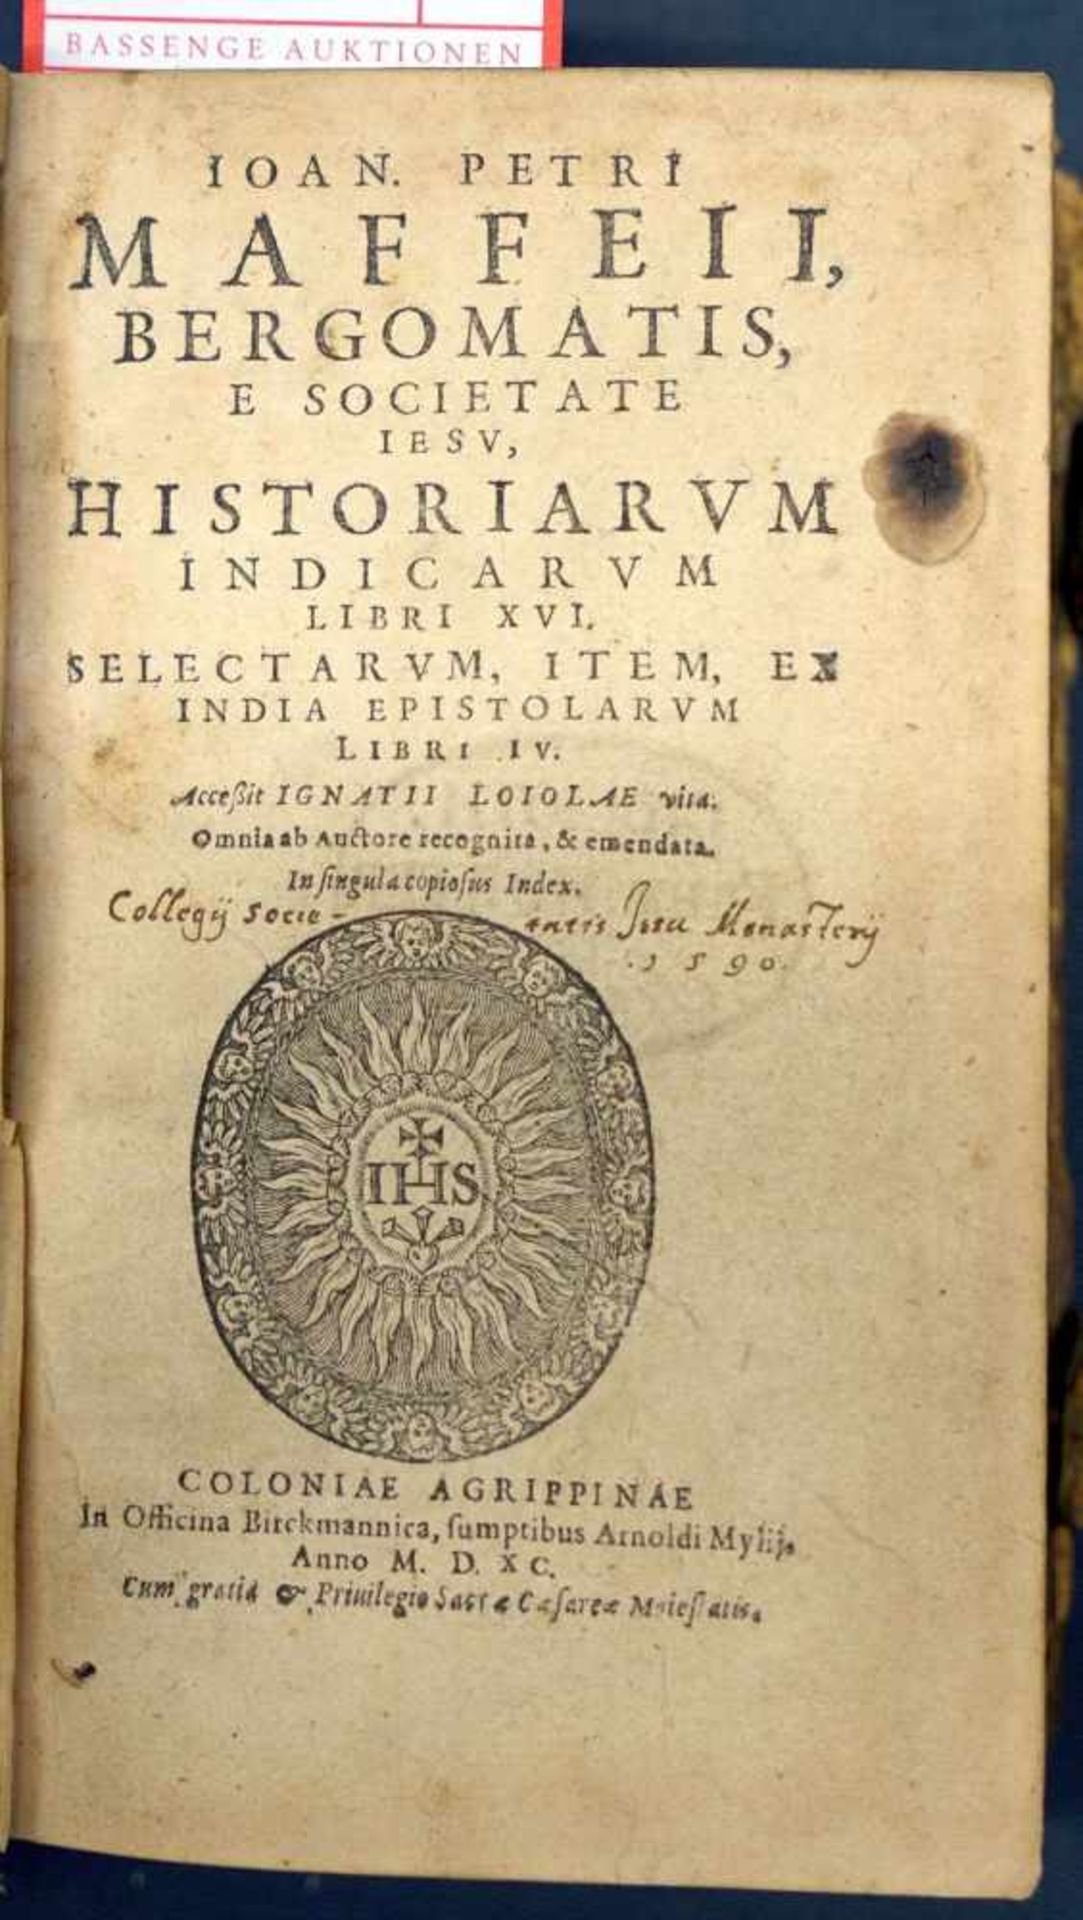 Maffei, Johann Peter: Historiarum indicarum libri XVI